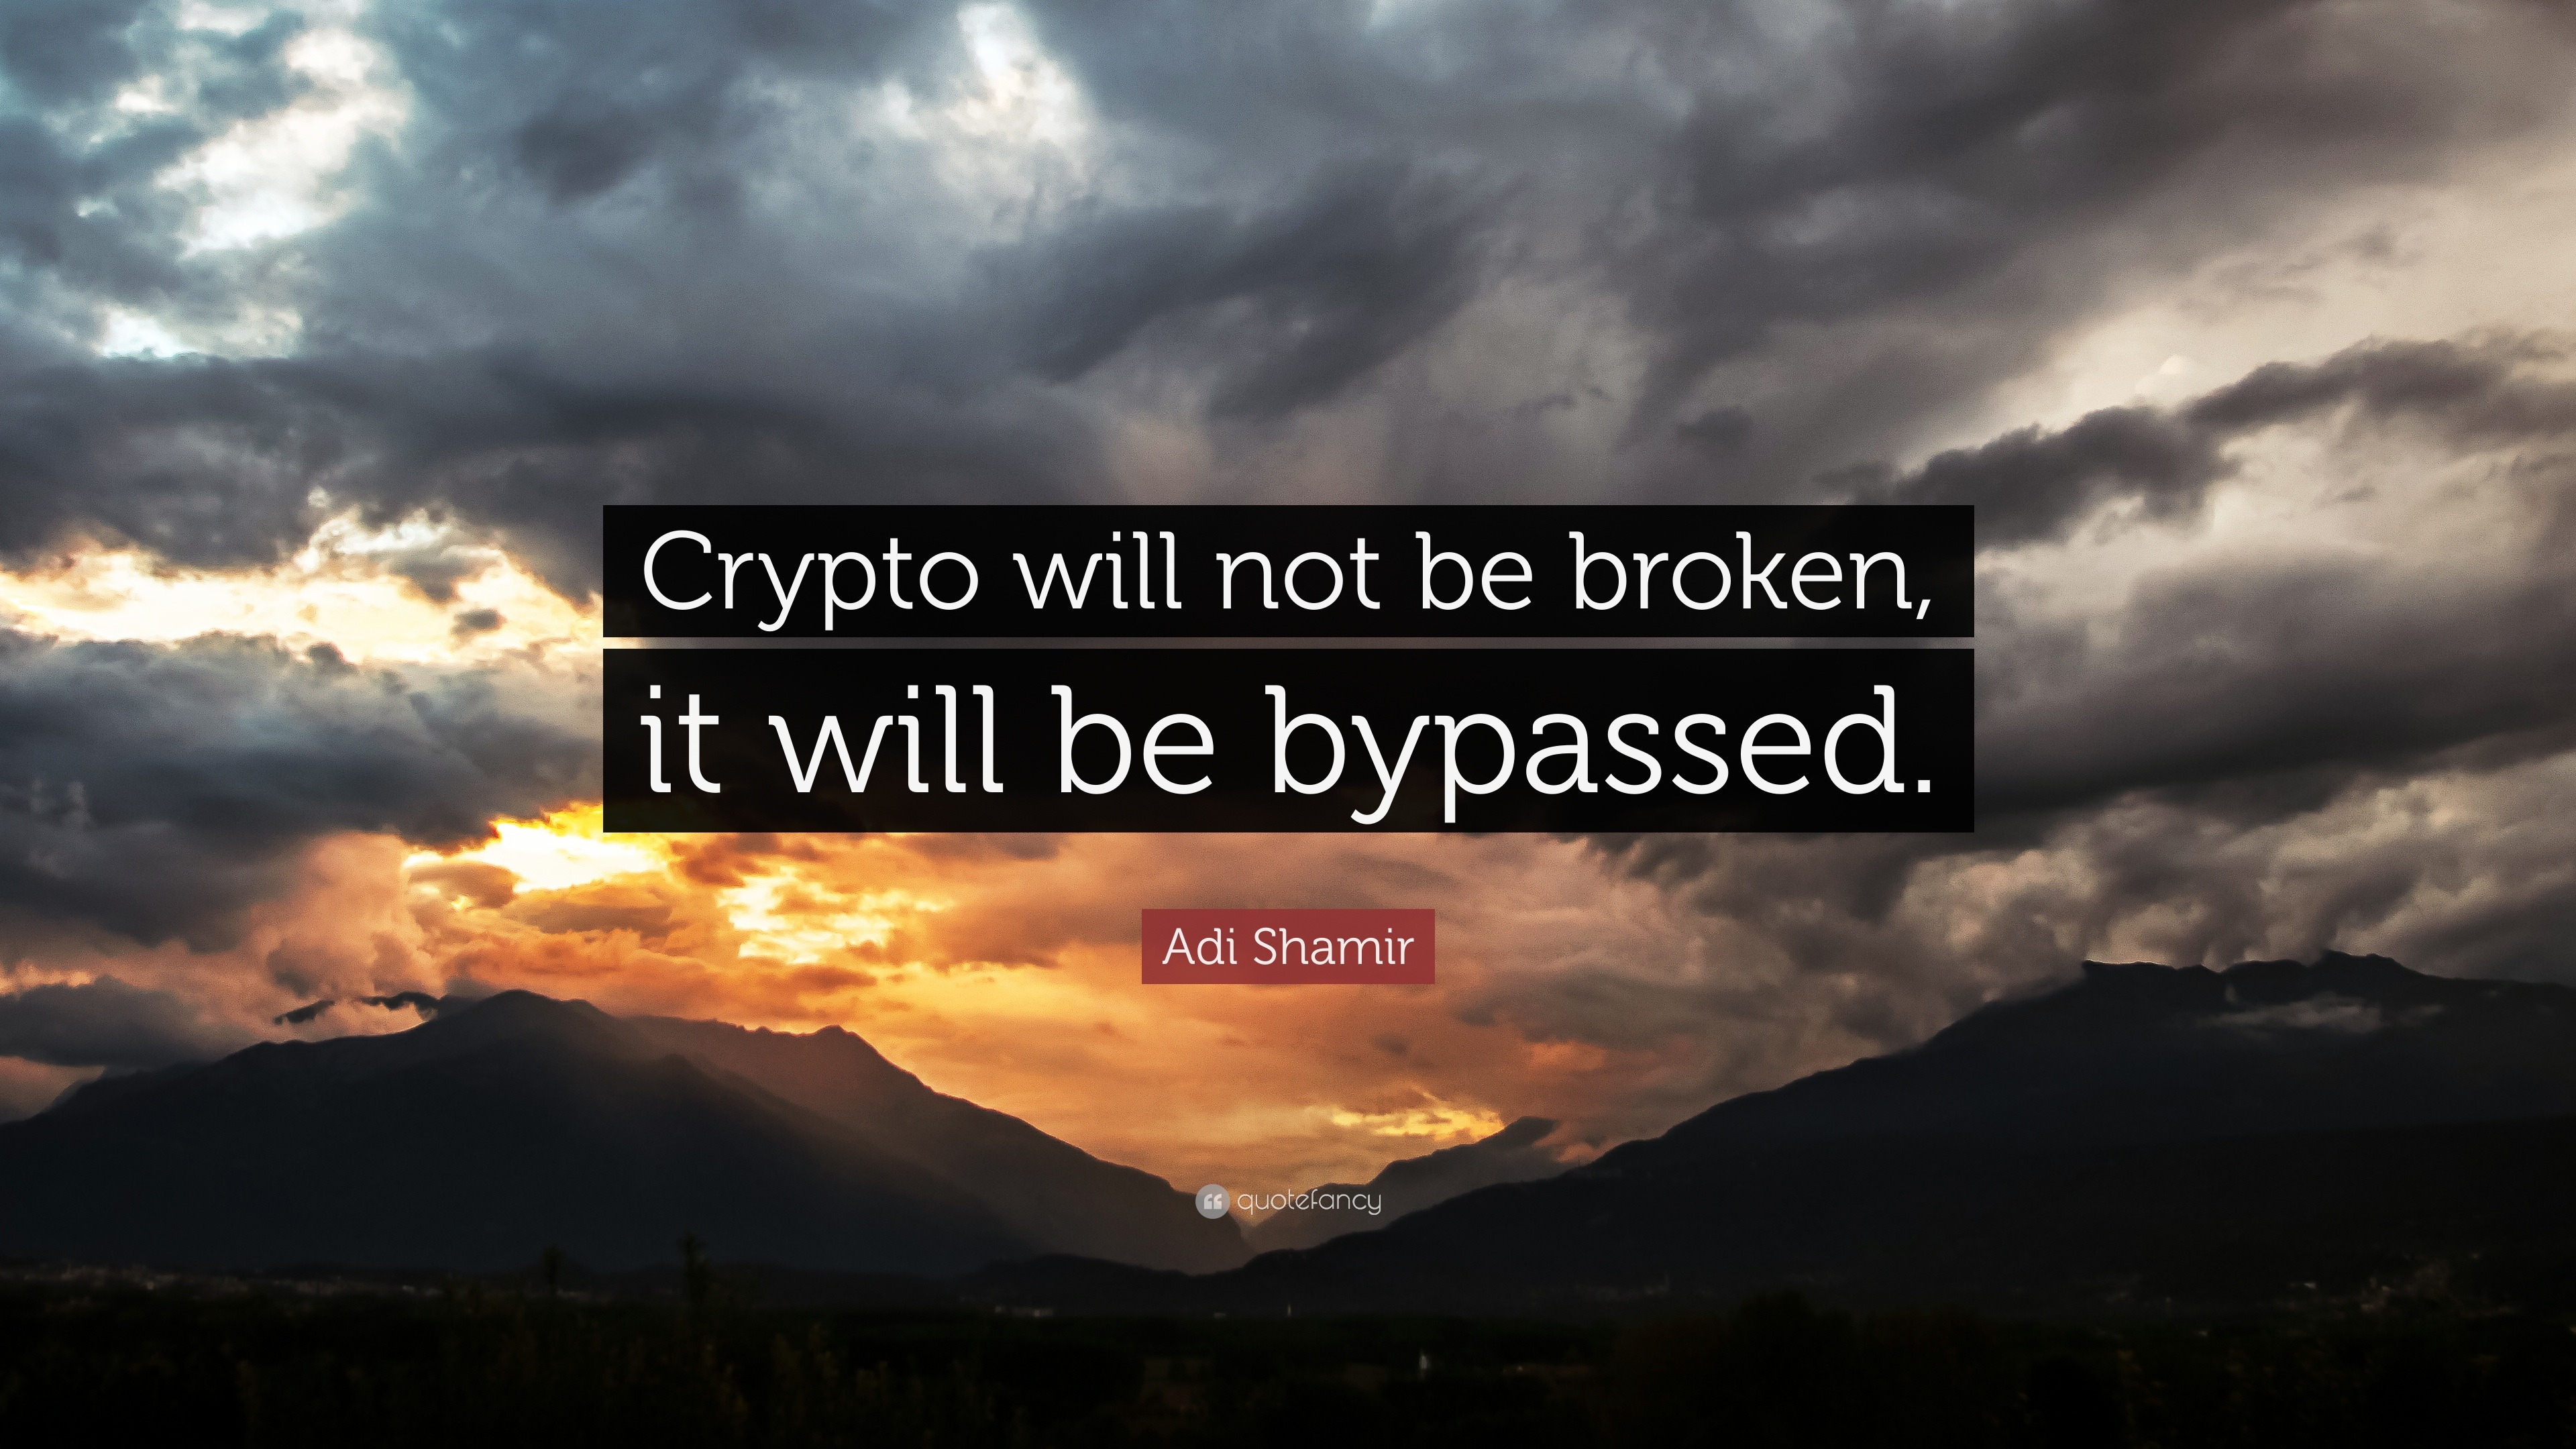 Quotes about crypto новости криптовалюты на сегодня биткоин